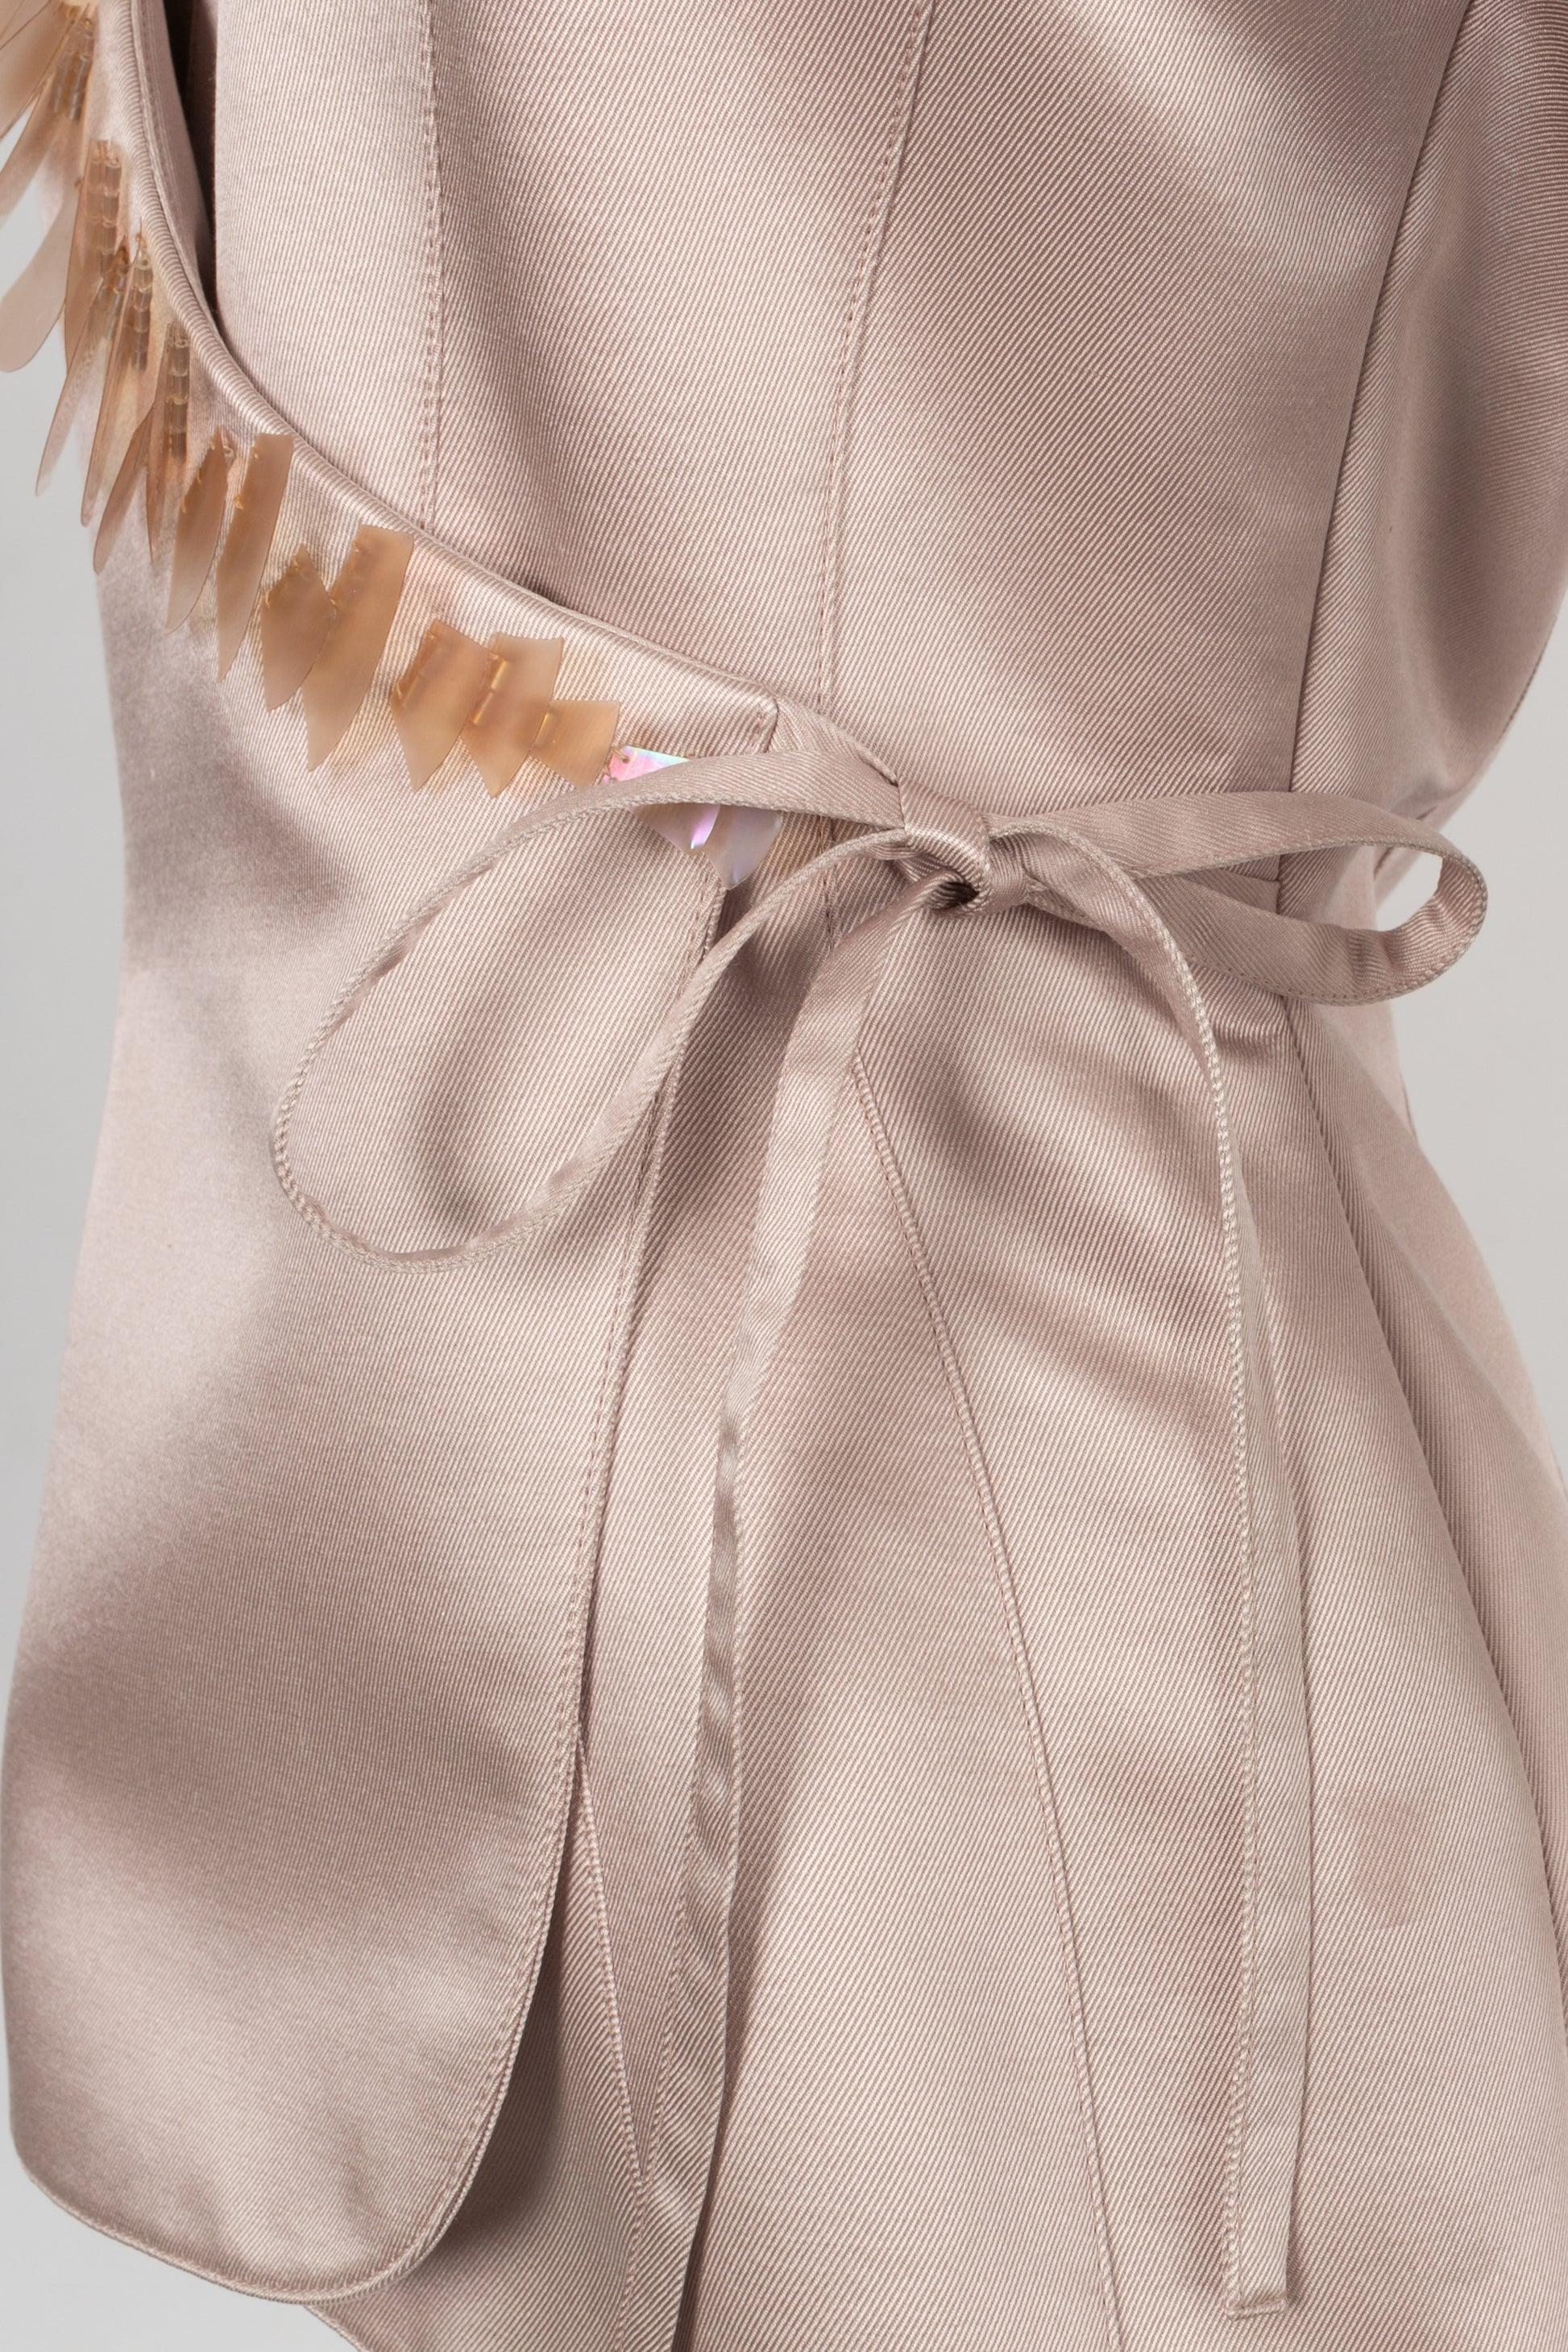 Thierry Mugler Pale Mauve Tone Silk Couture Set 38FR For Sale 3